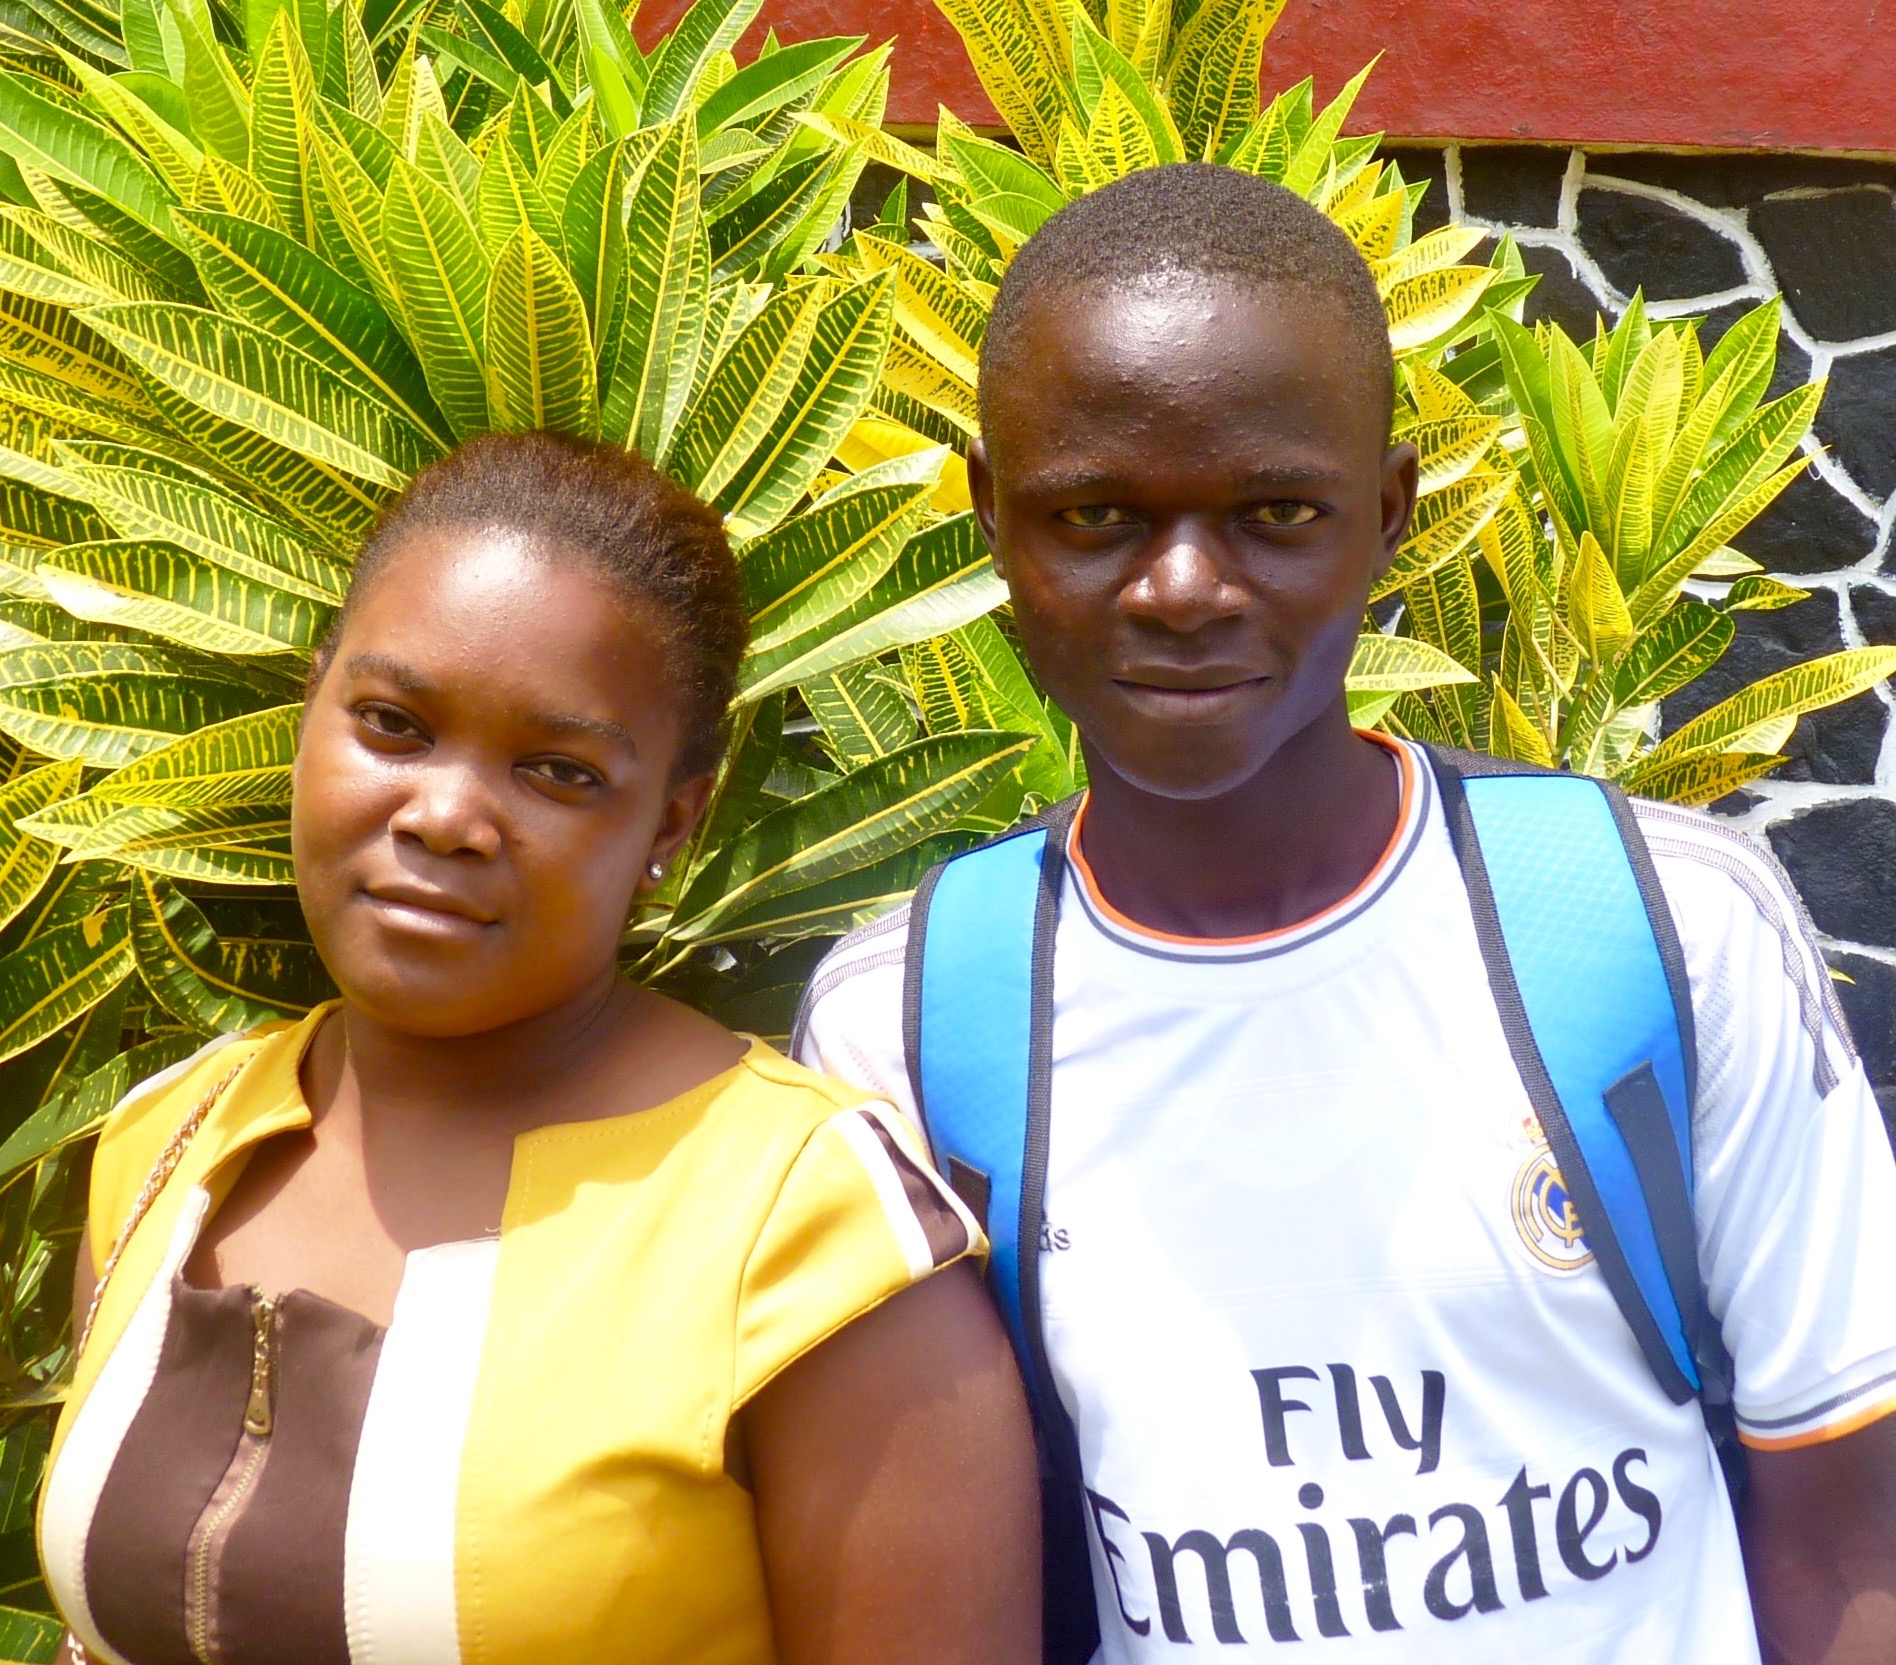 Ms. Naomi Nyumah and Mr. Solomon Marlee